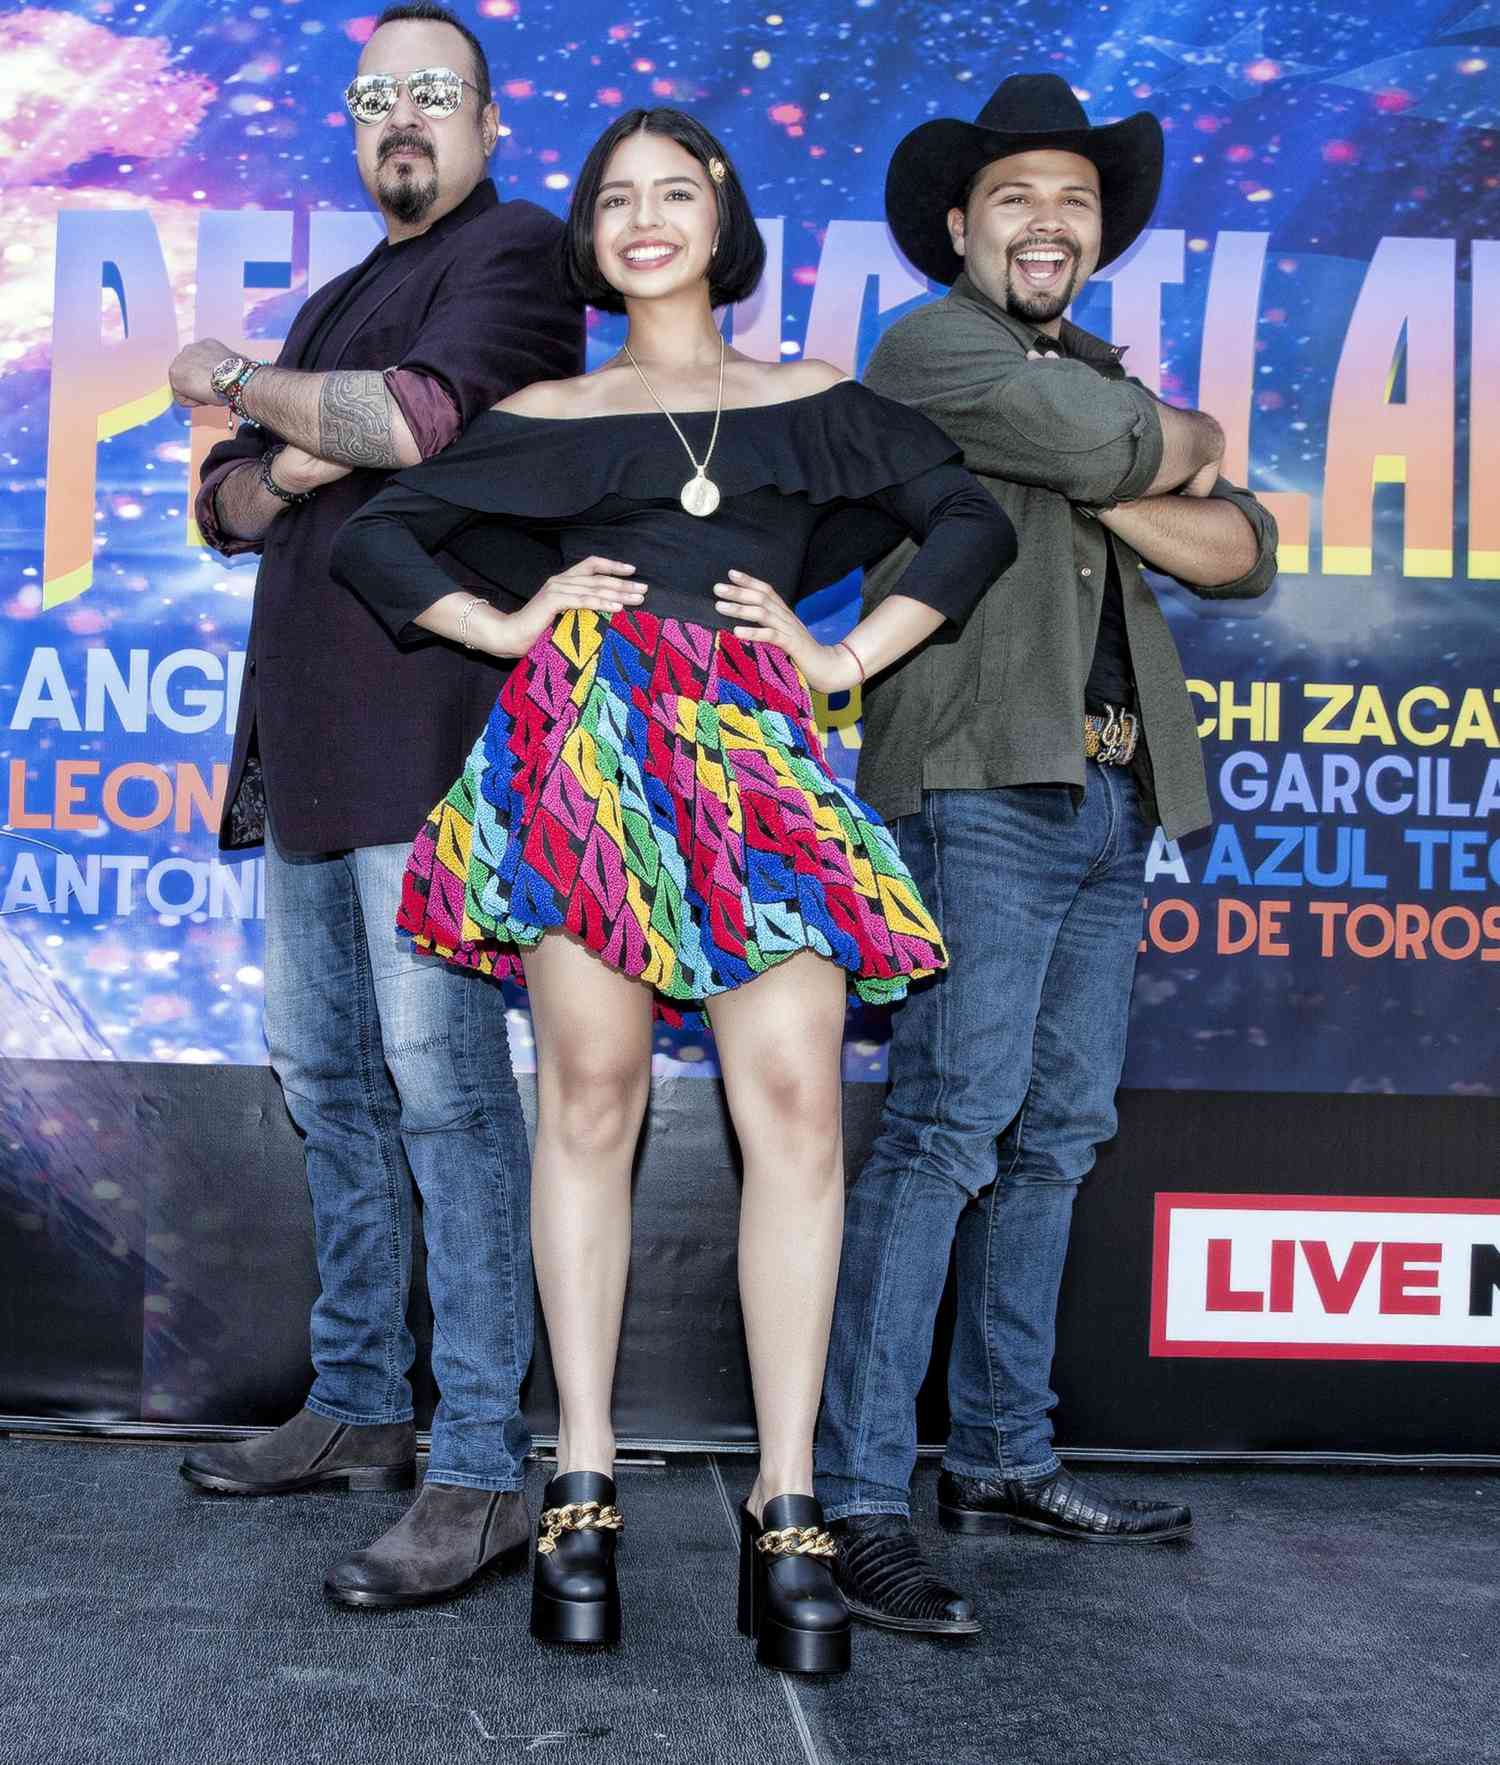 Pepe Aguilar anuncia gira "Jaripeo sin Fronteras USA"